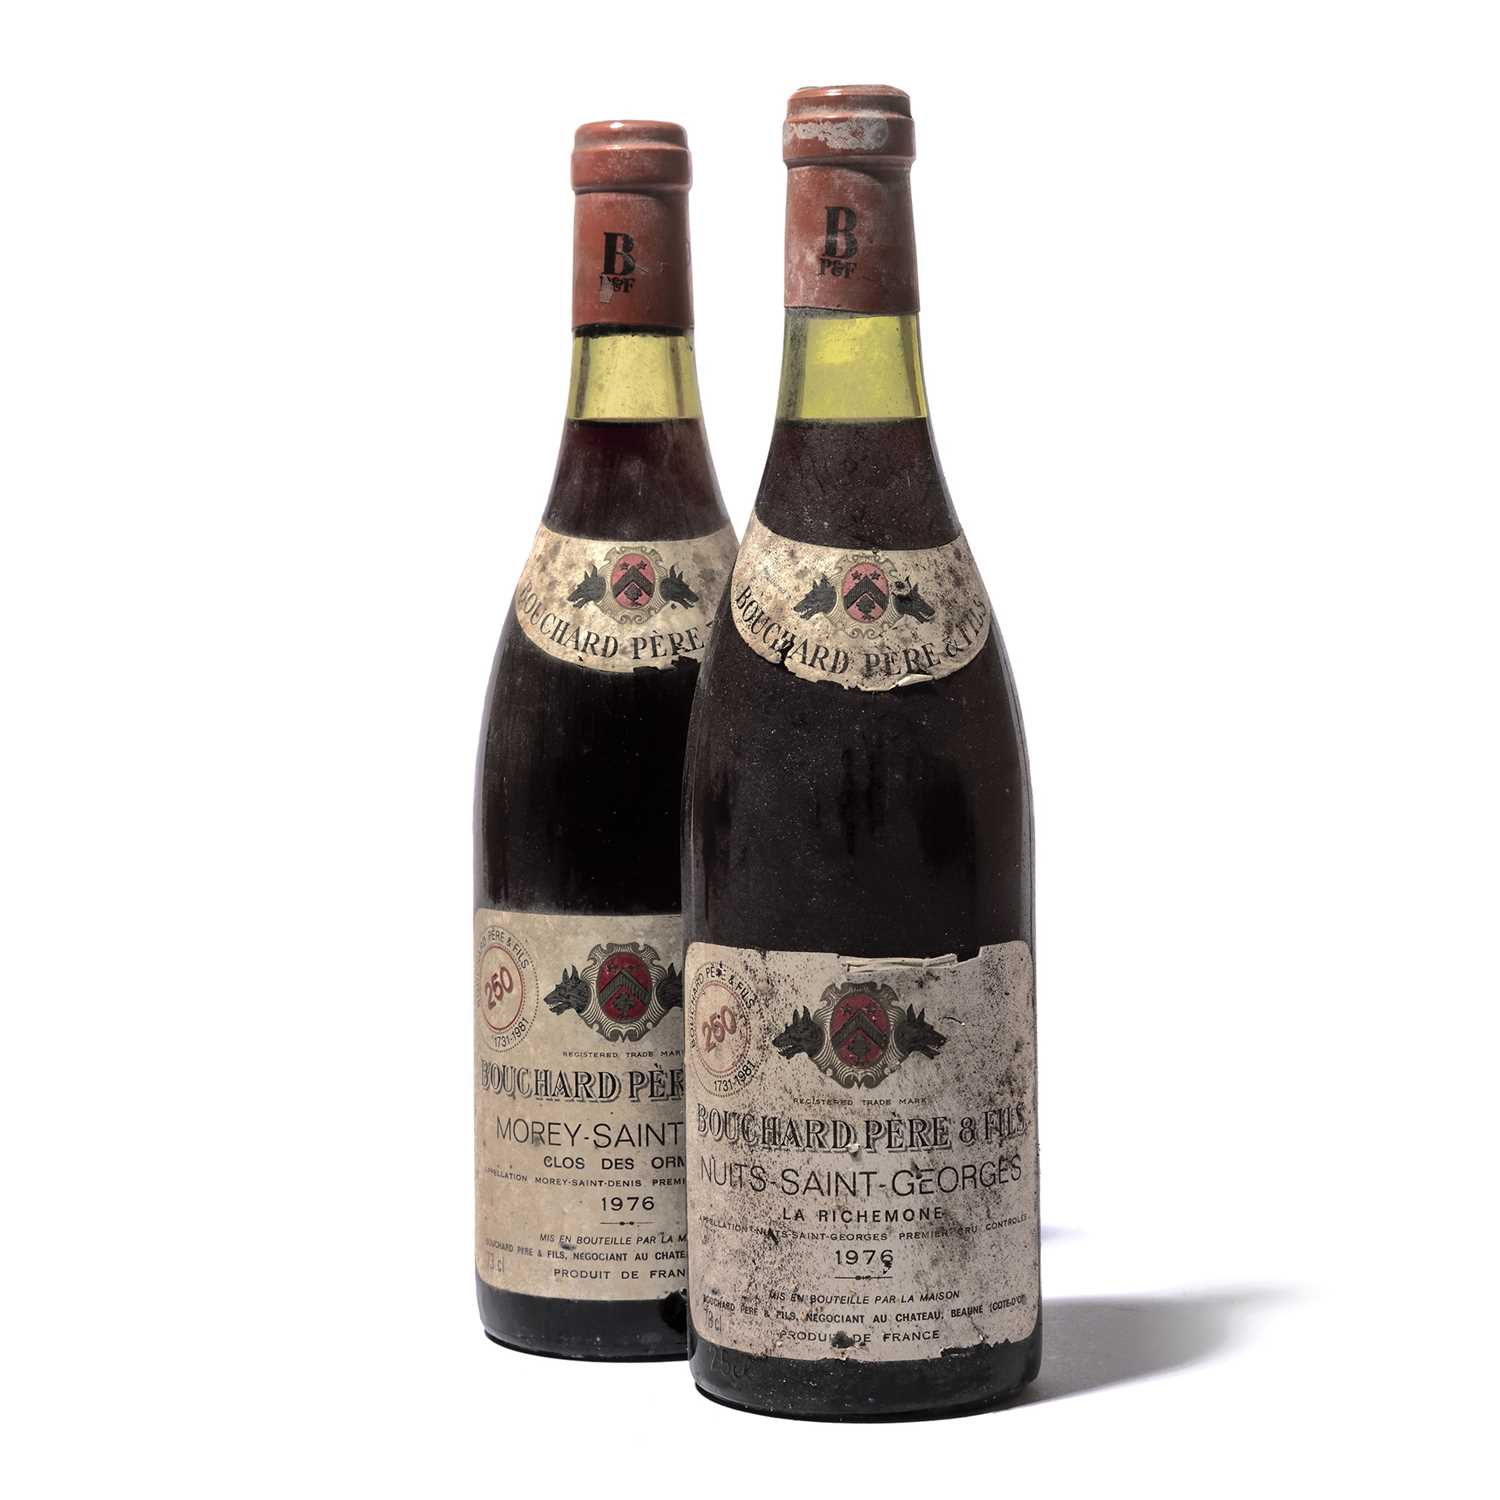 Lot 182 - 6 bottles 1976 Mixed Bouchard Pere et Fils